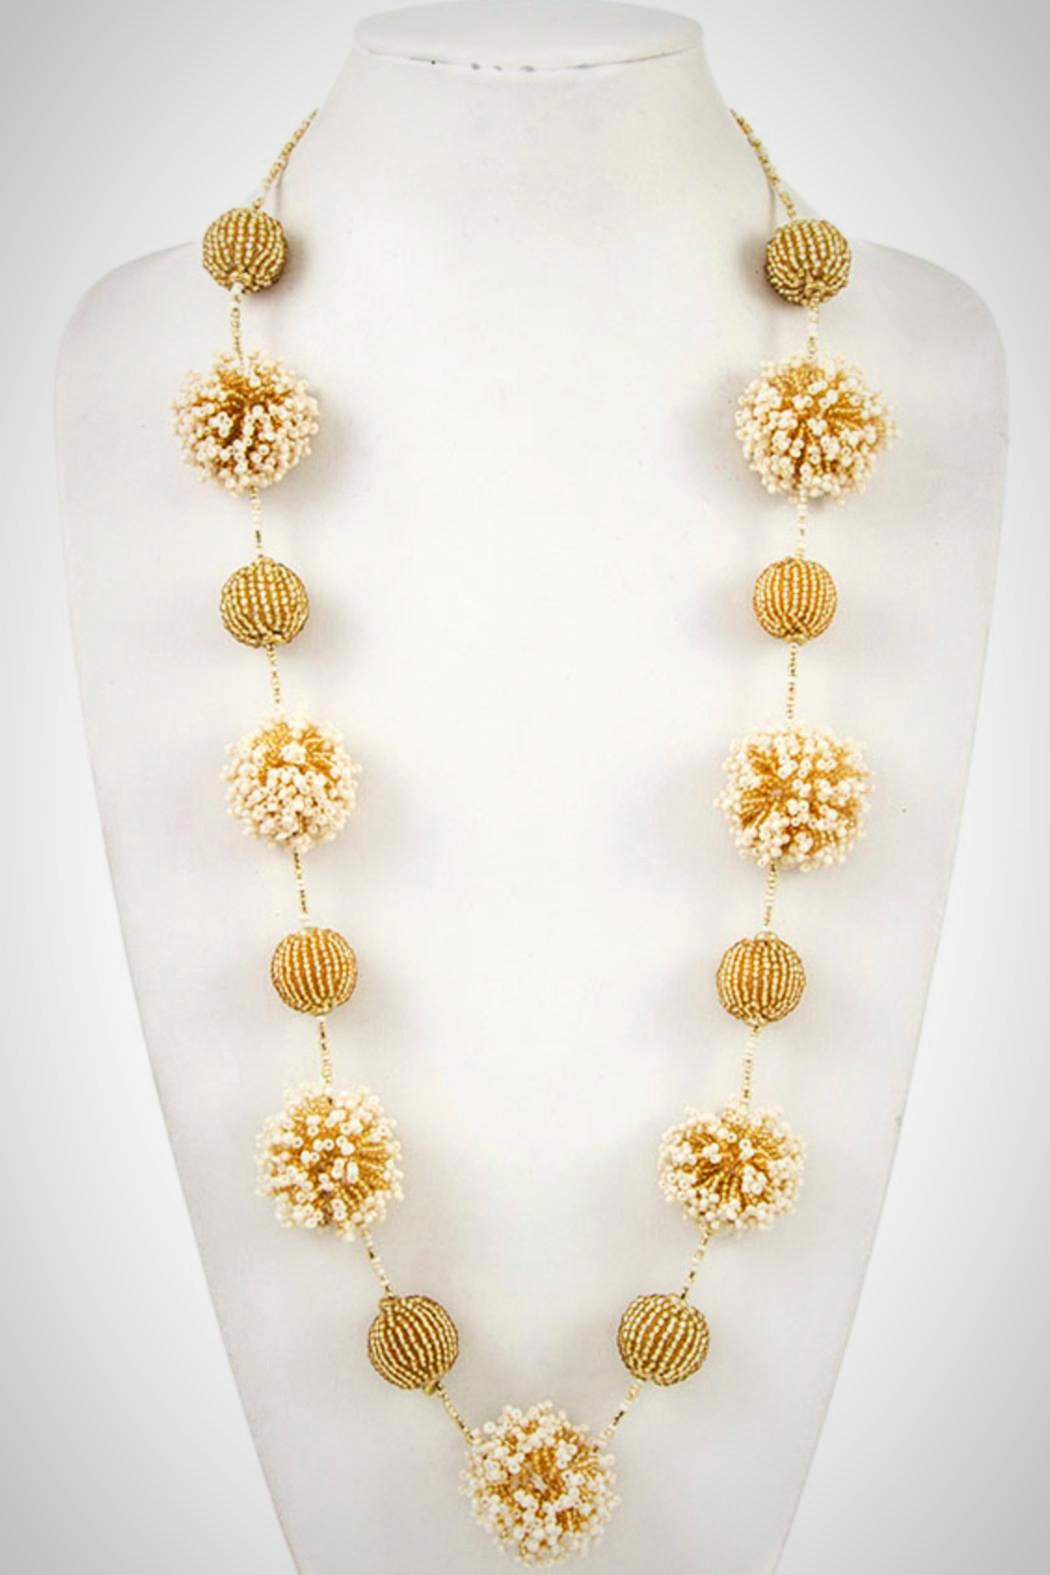 Ivory Beaded Ball Necklace - Embellish Your Life 